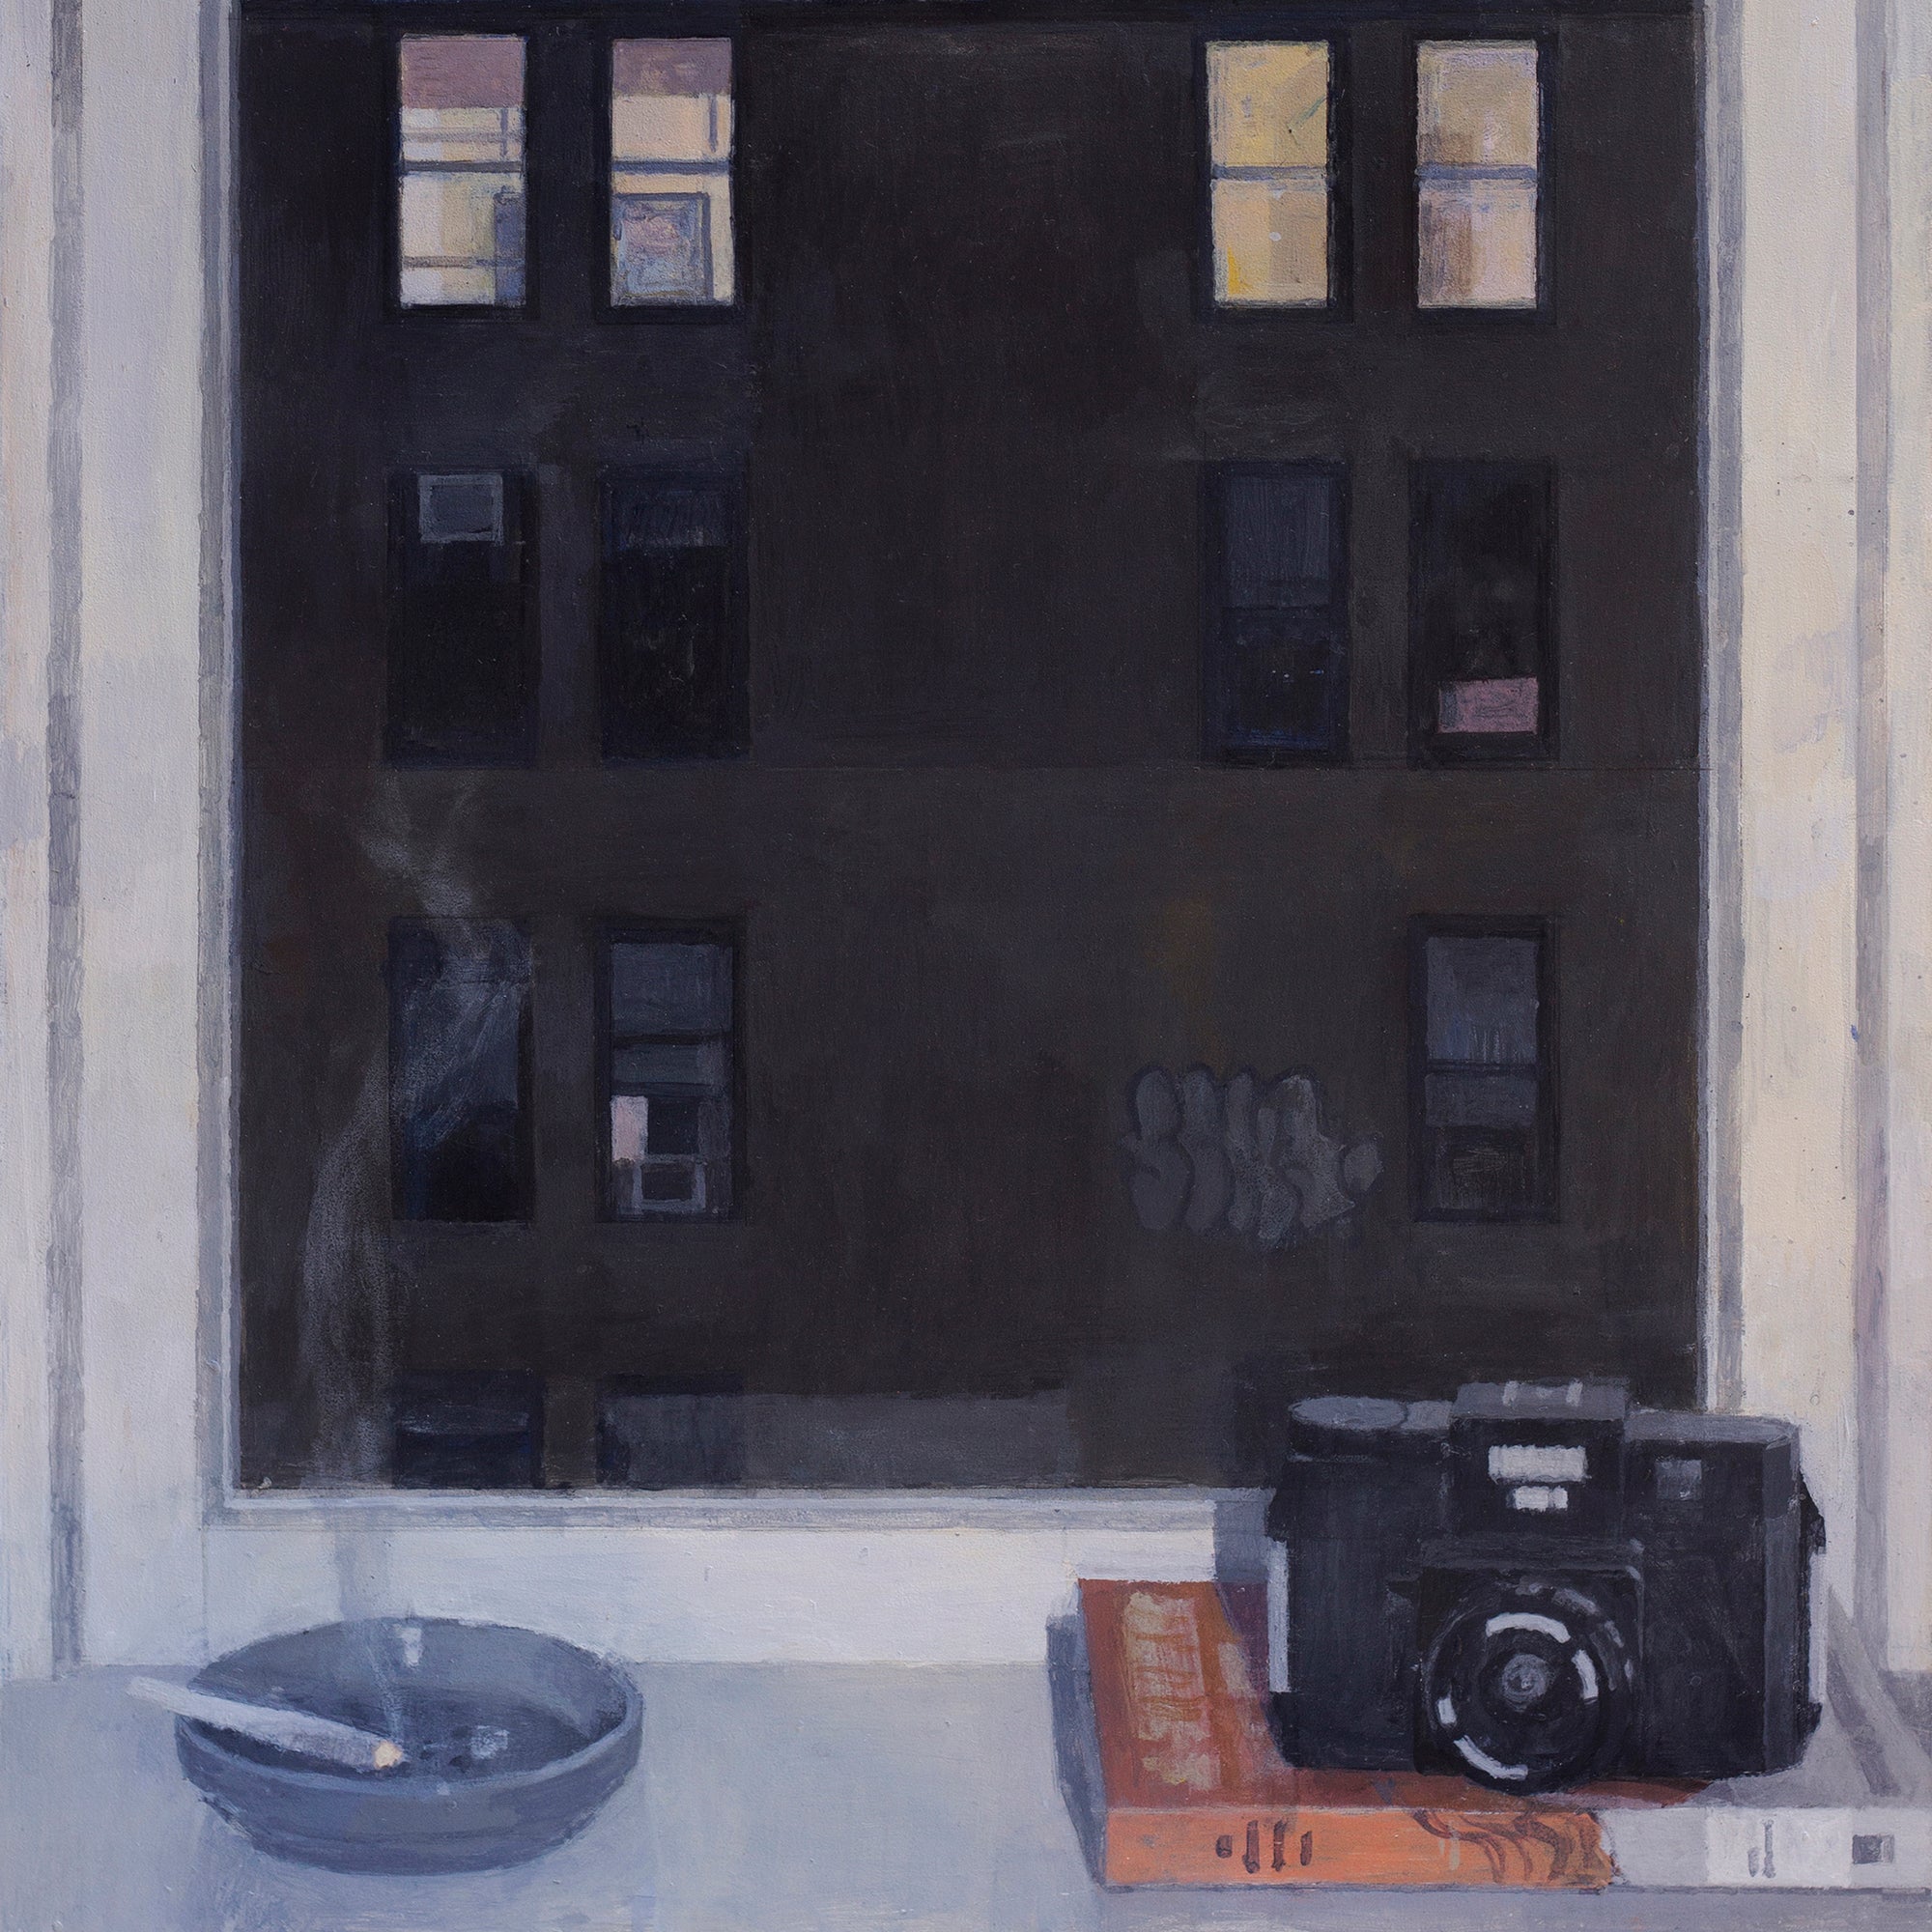 Mike Howat: "Rear Window" Debut Edition - 4/12/23